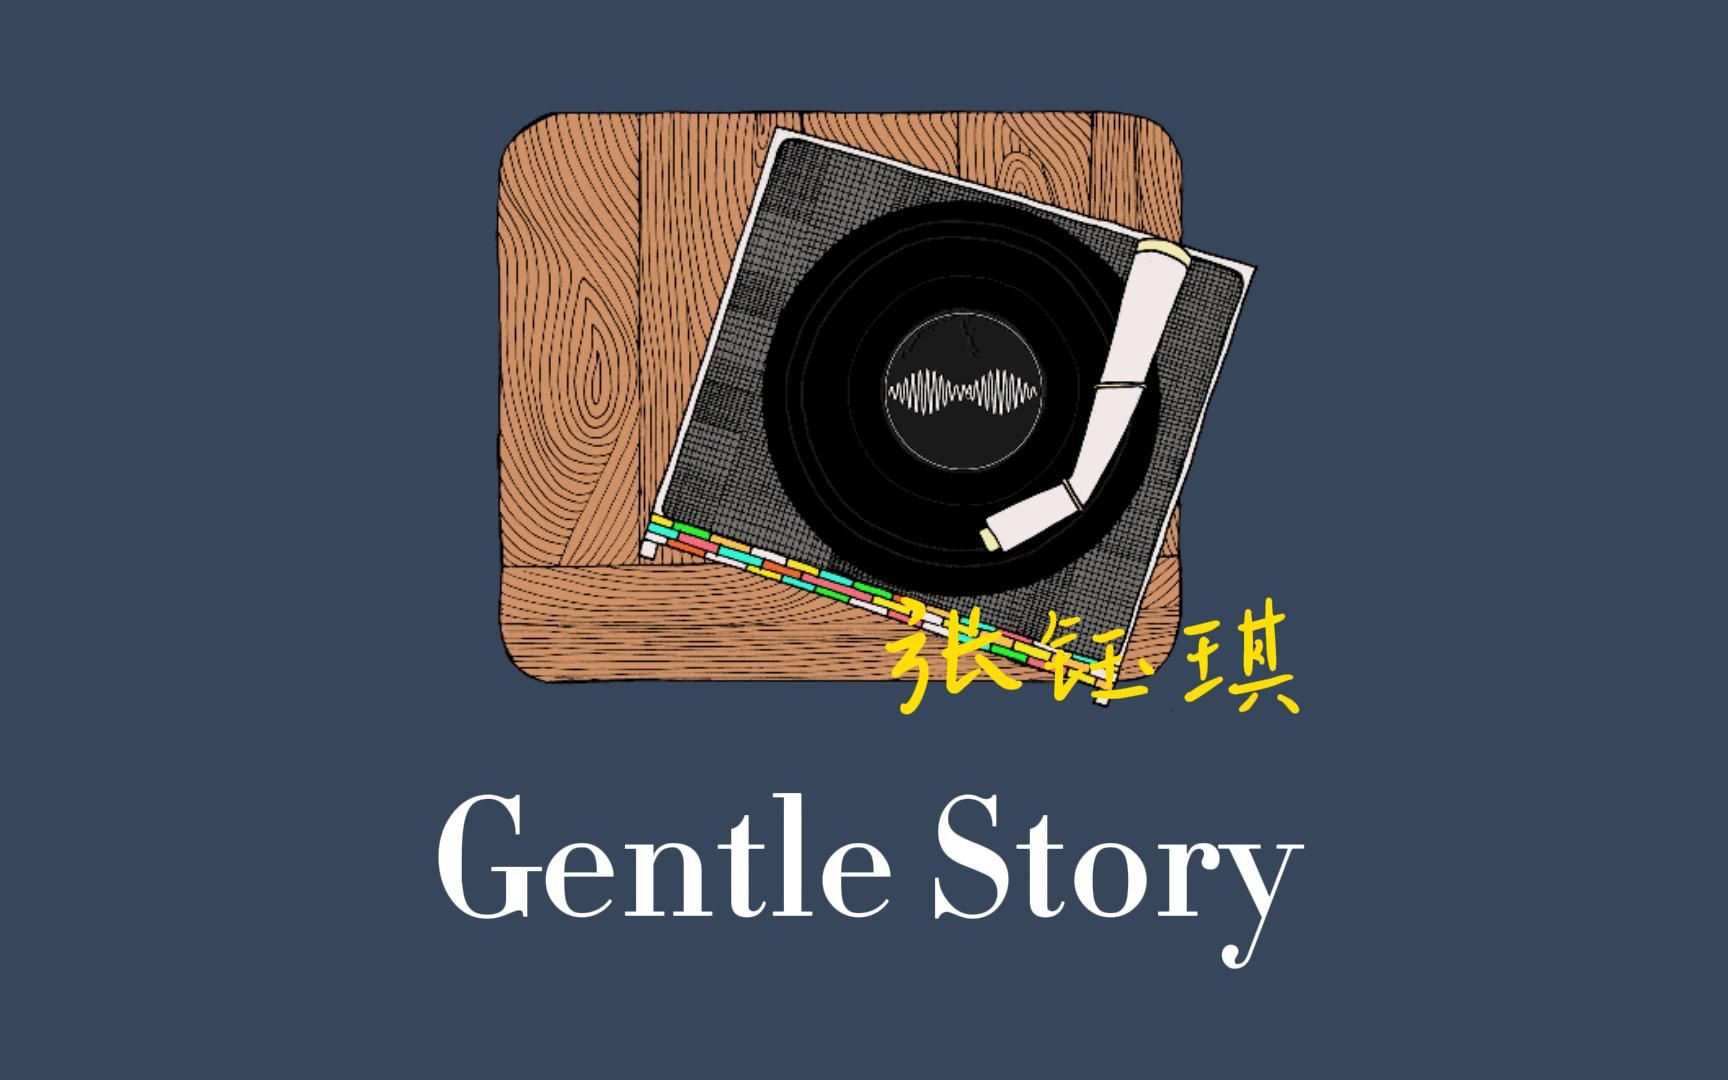 【张钰琪 | 原创】《Gentle Story》一个很chill的故事